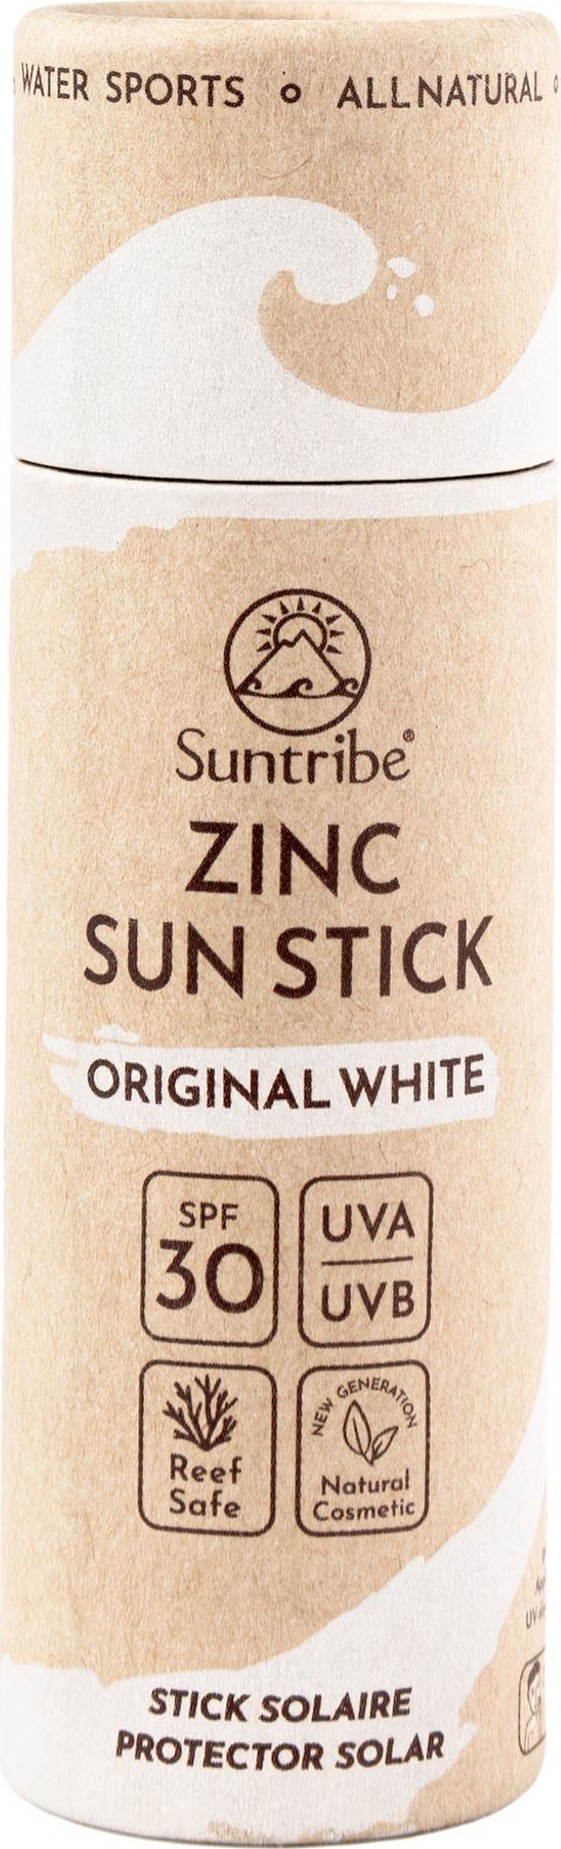 Suntribe Natural Mineral Zinc Sun Stick SPF 30 White